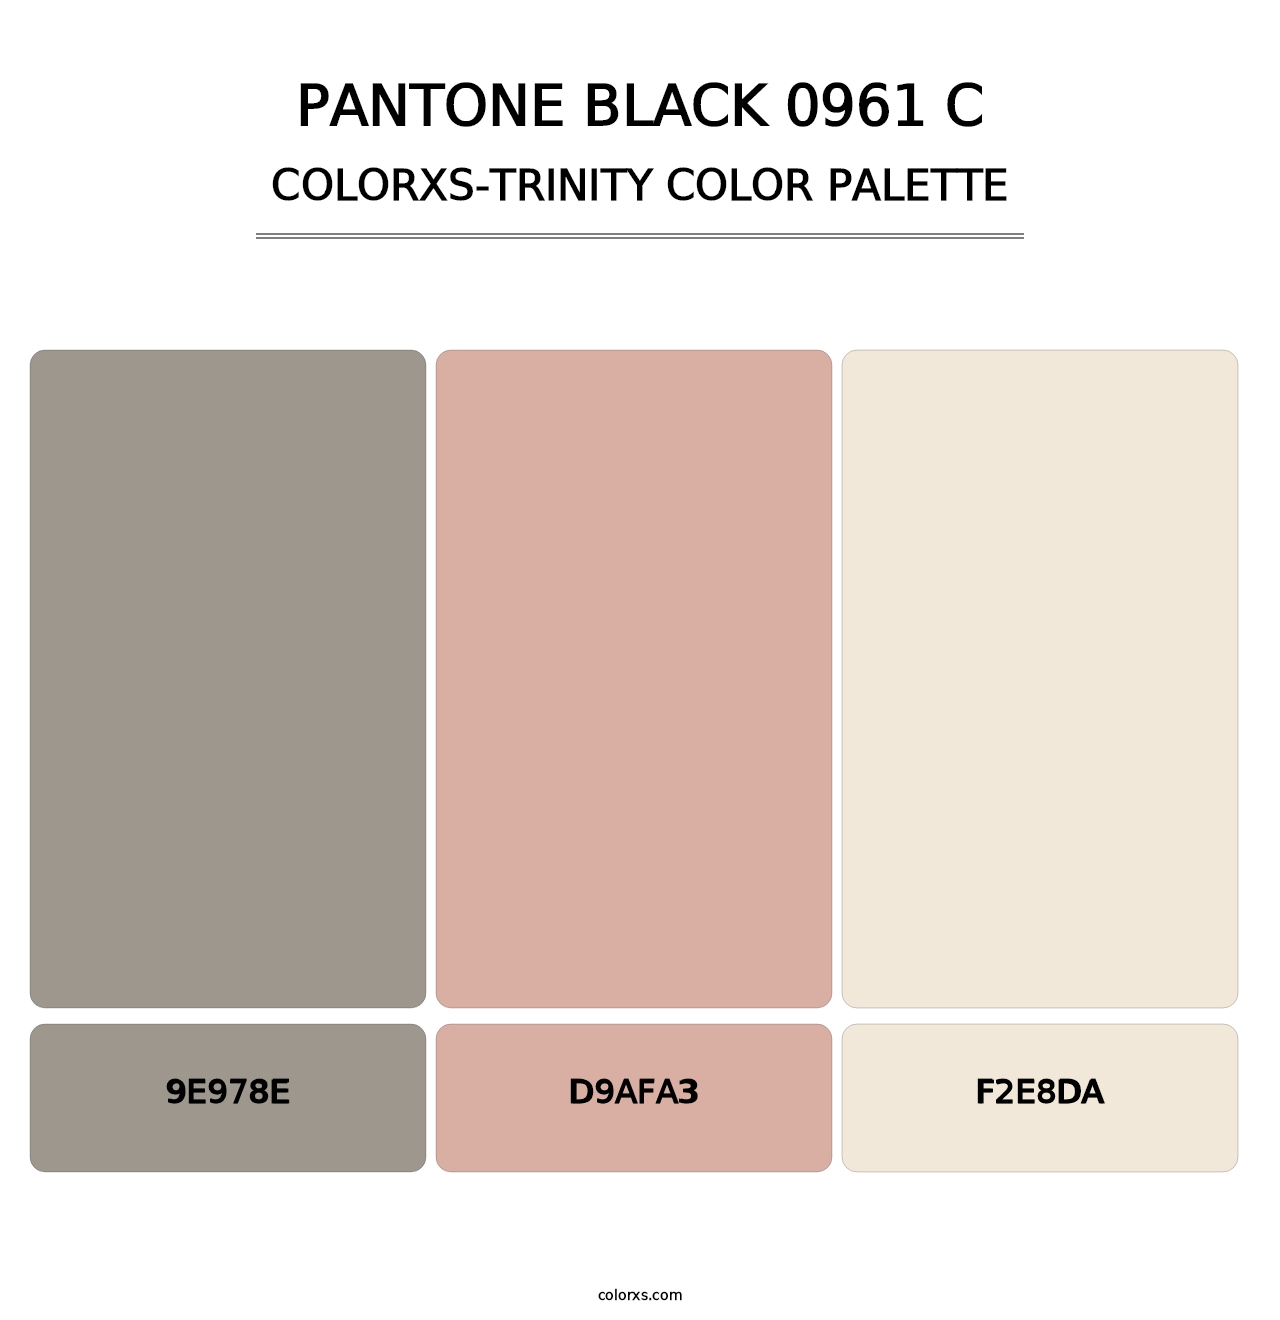 PANTONE Black 0961 C - Colorxs Trinity Palette